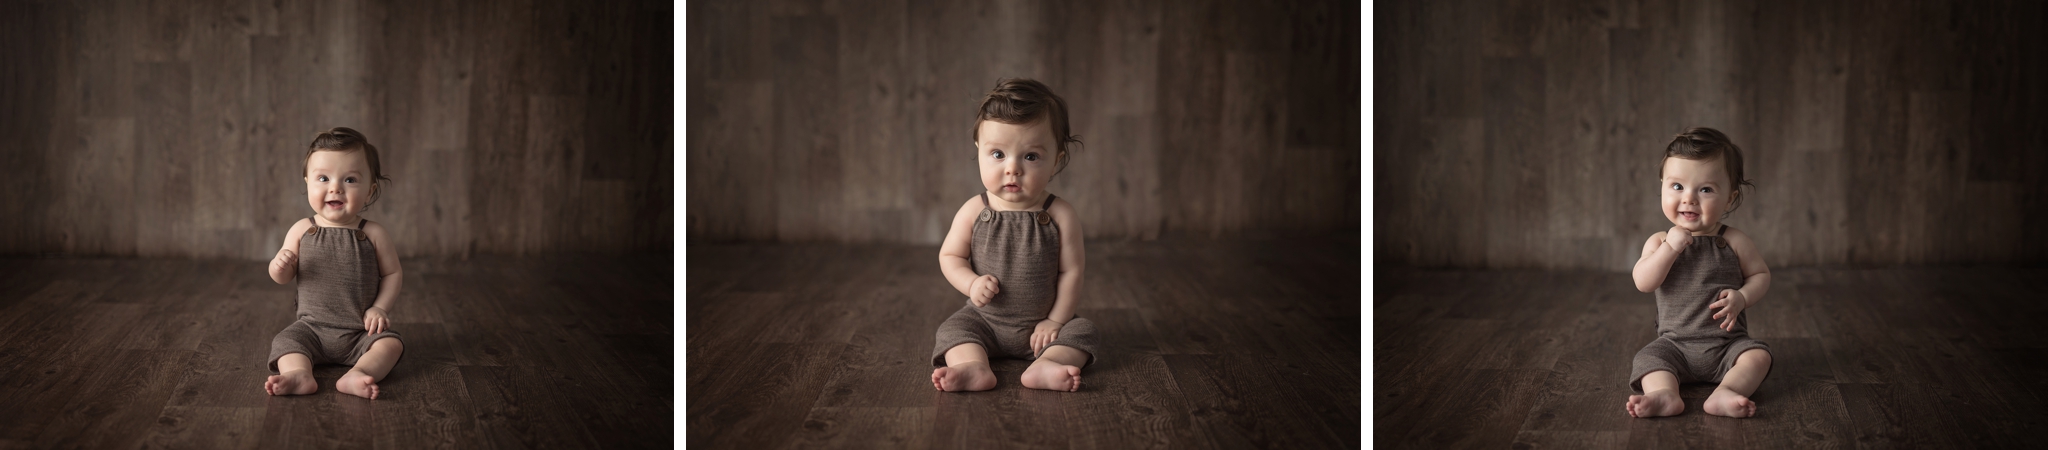 ottawa baby photographer, best baby photos, baby photography ottawa